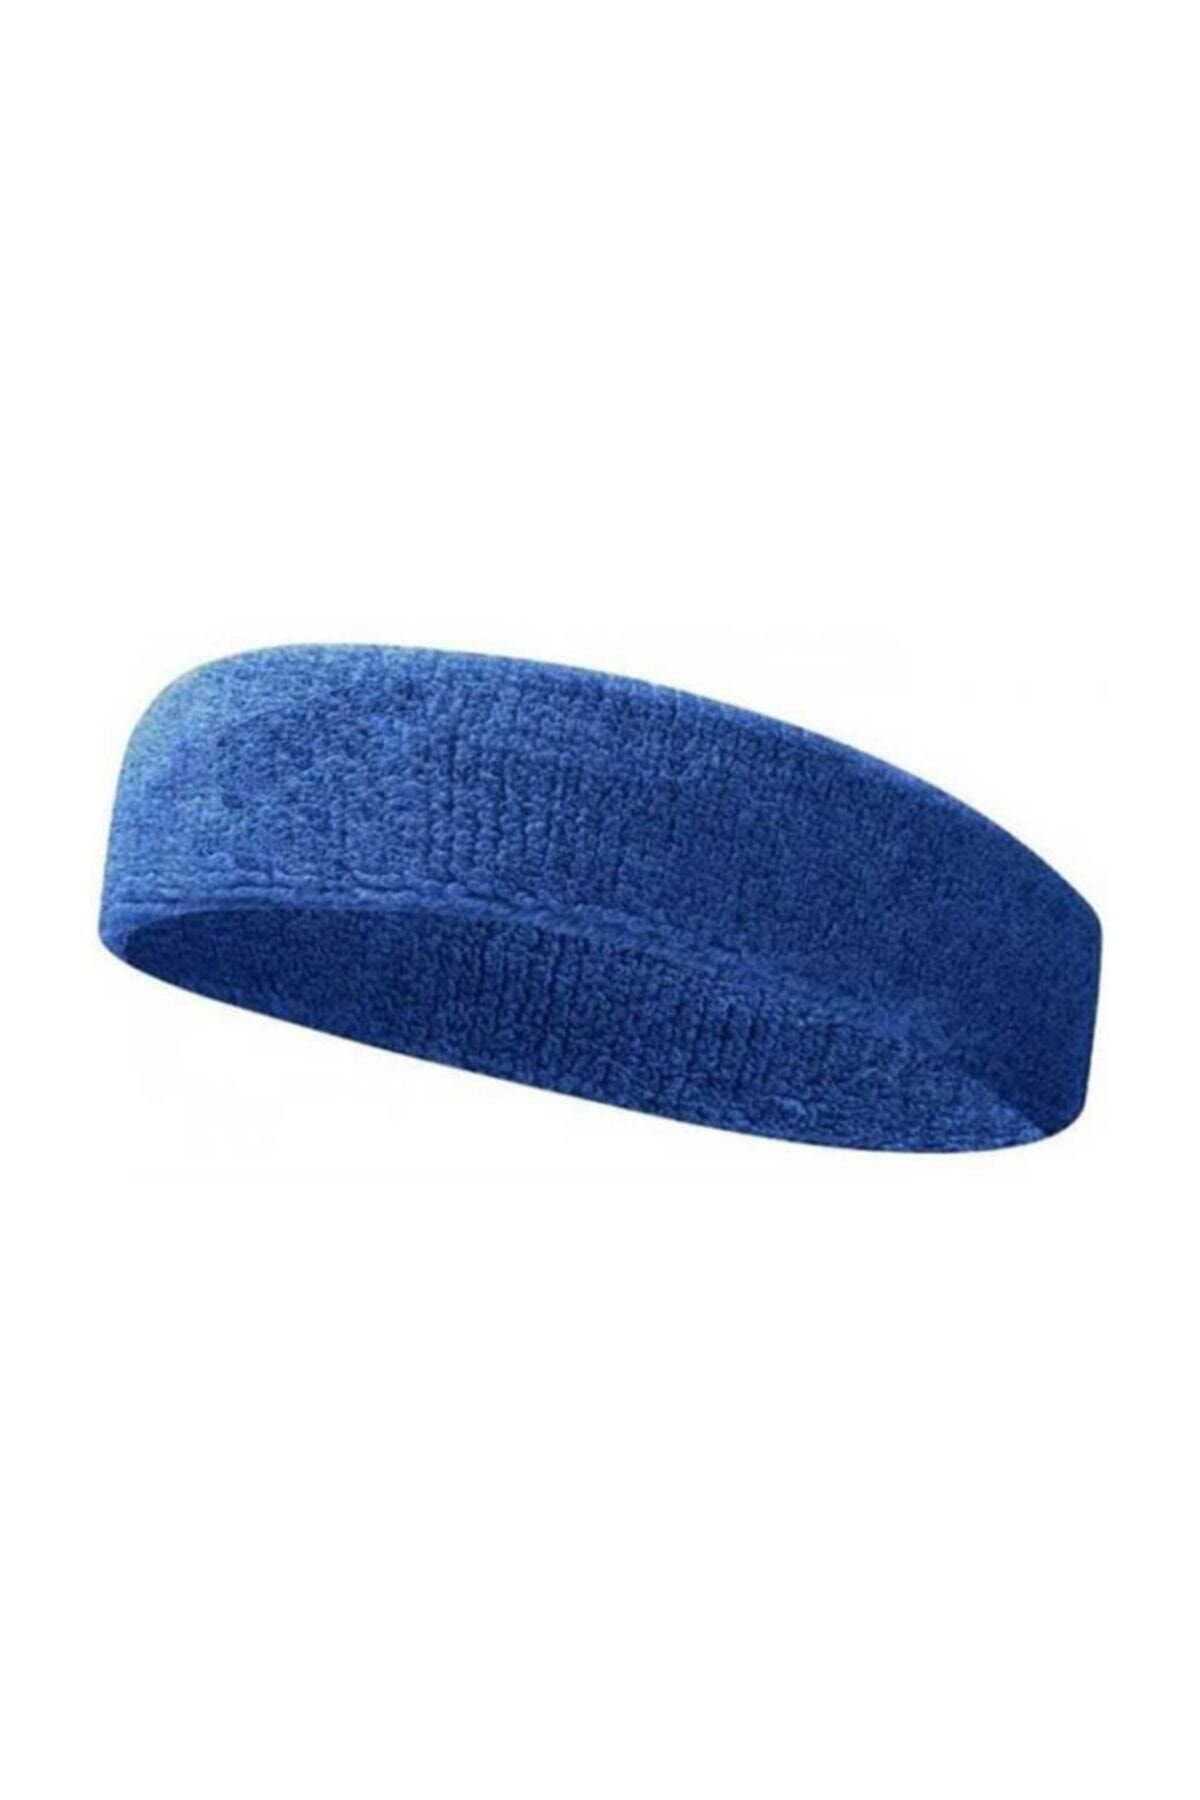 Yukon Havlu Ter Bandı Kafa Bandı Headband Tenis Saç Bandı-mavi